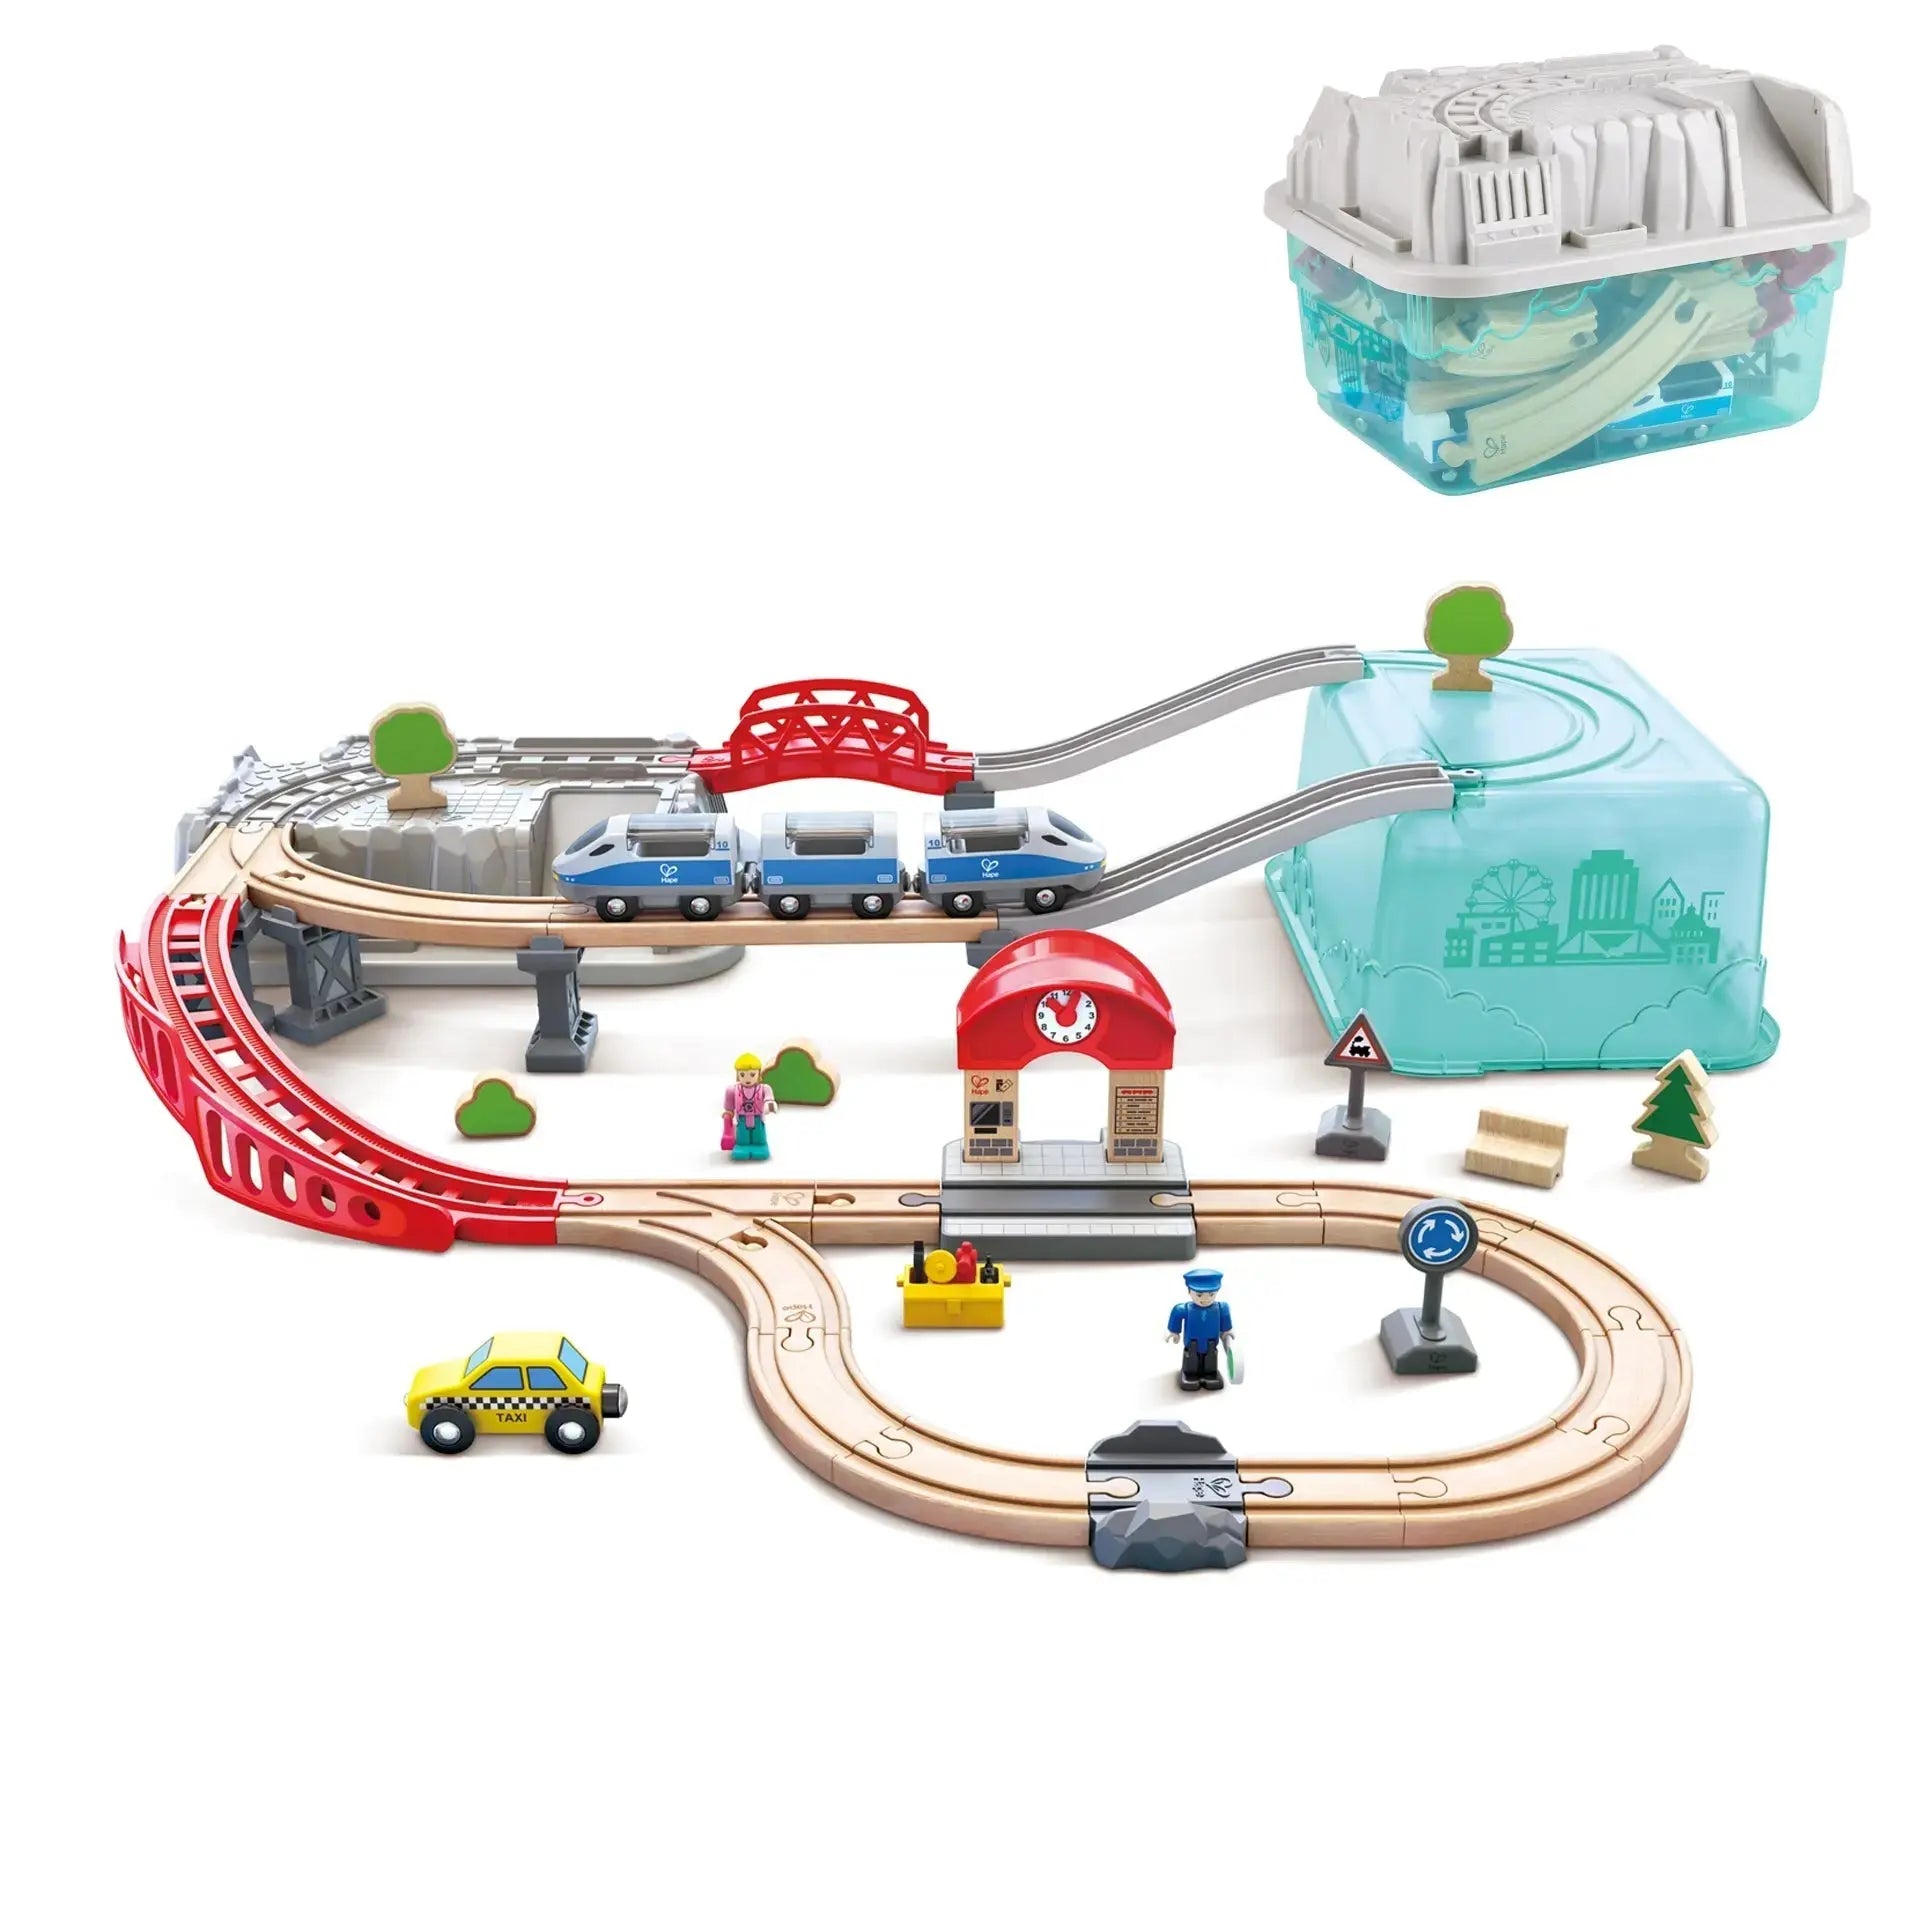 Hape Wooden Busy City Train Rail Set| 51 PCs Pretend Play Railway Set for  Kids Age 3Y+